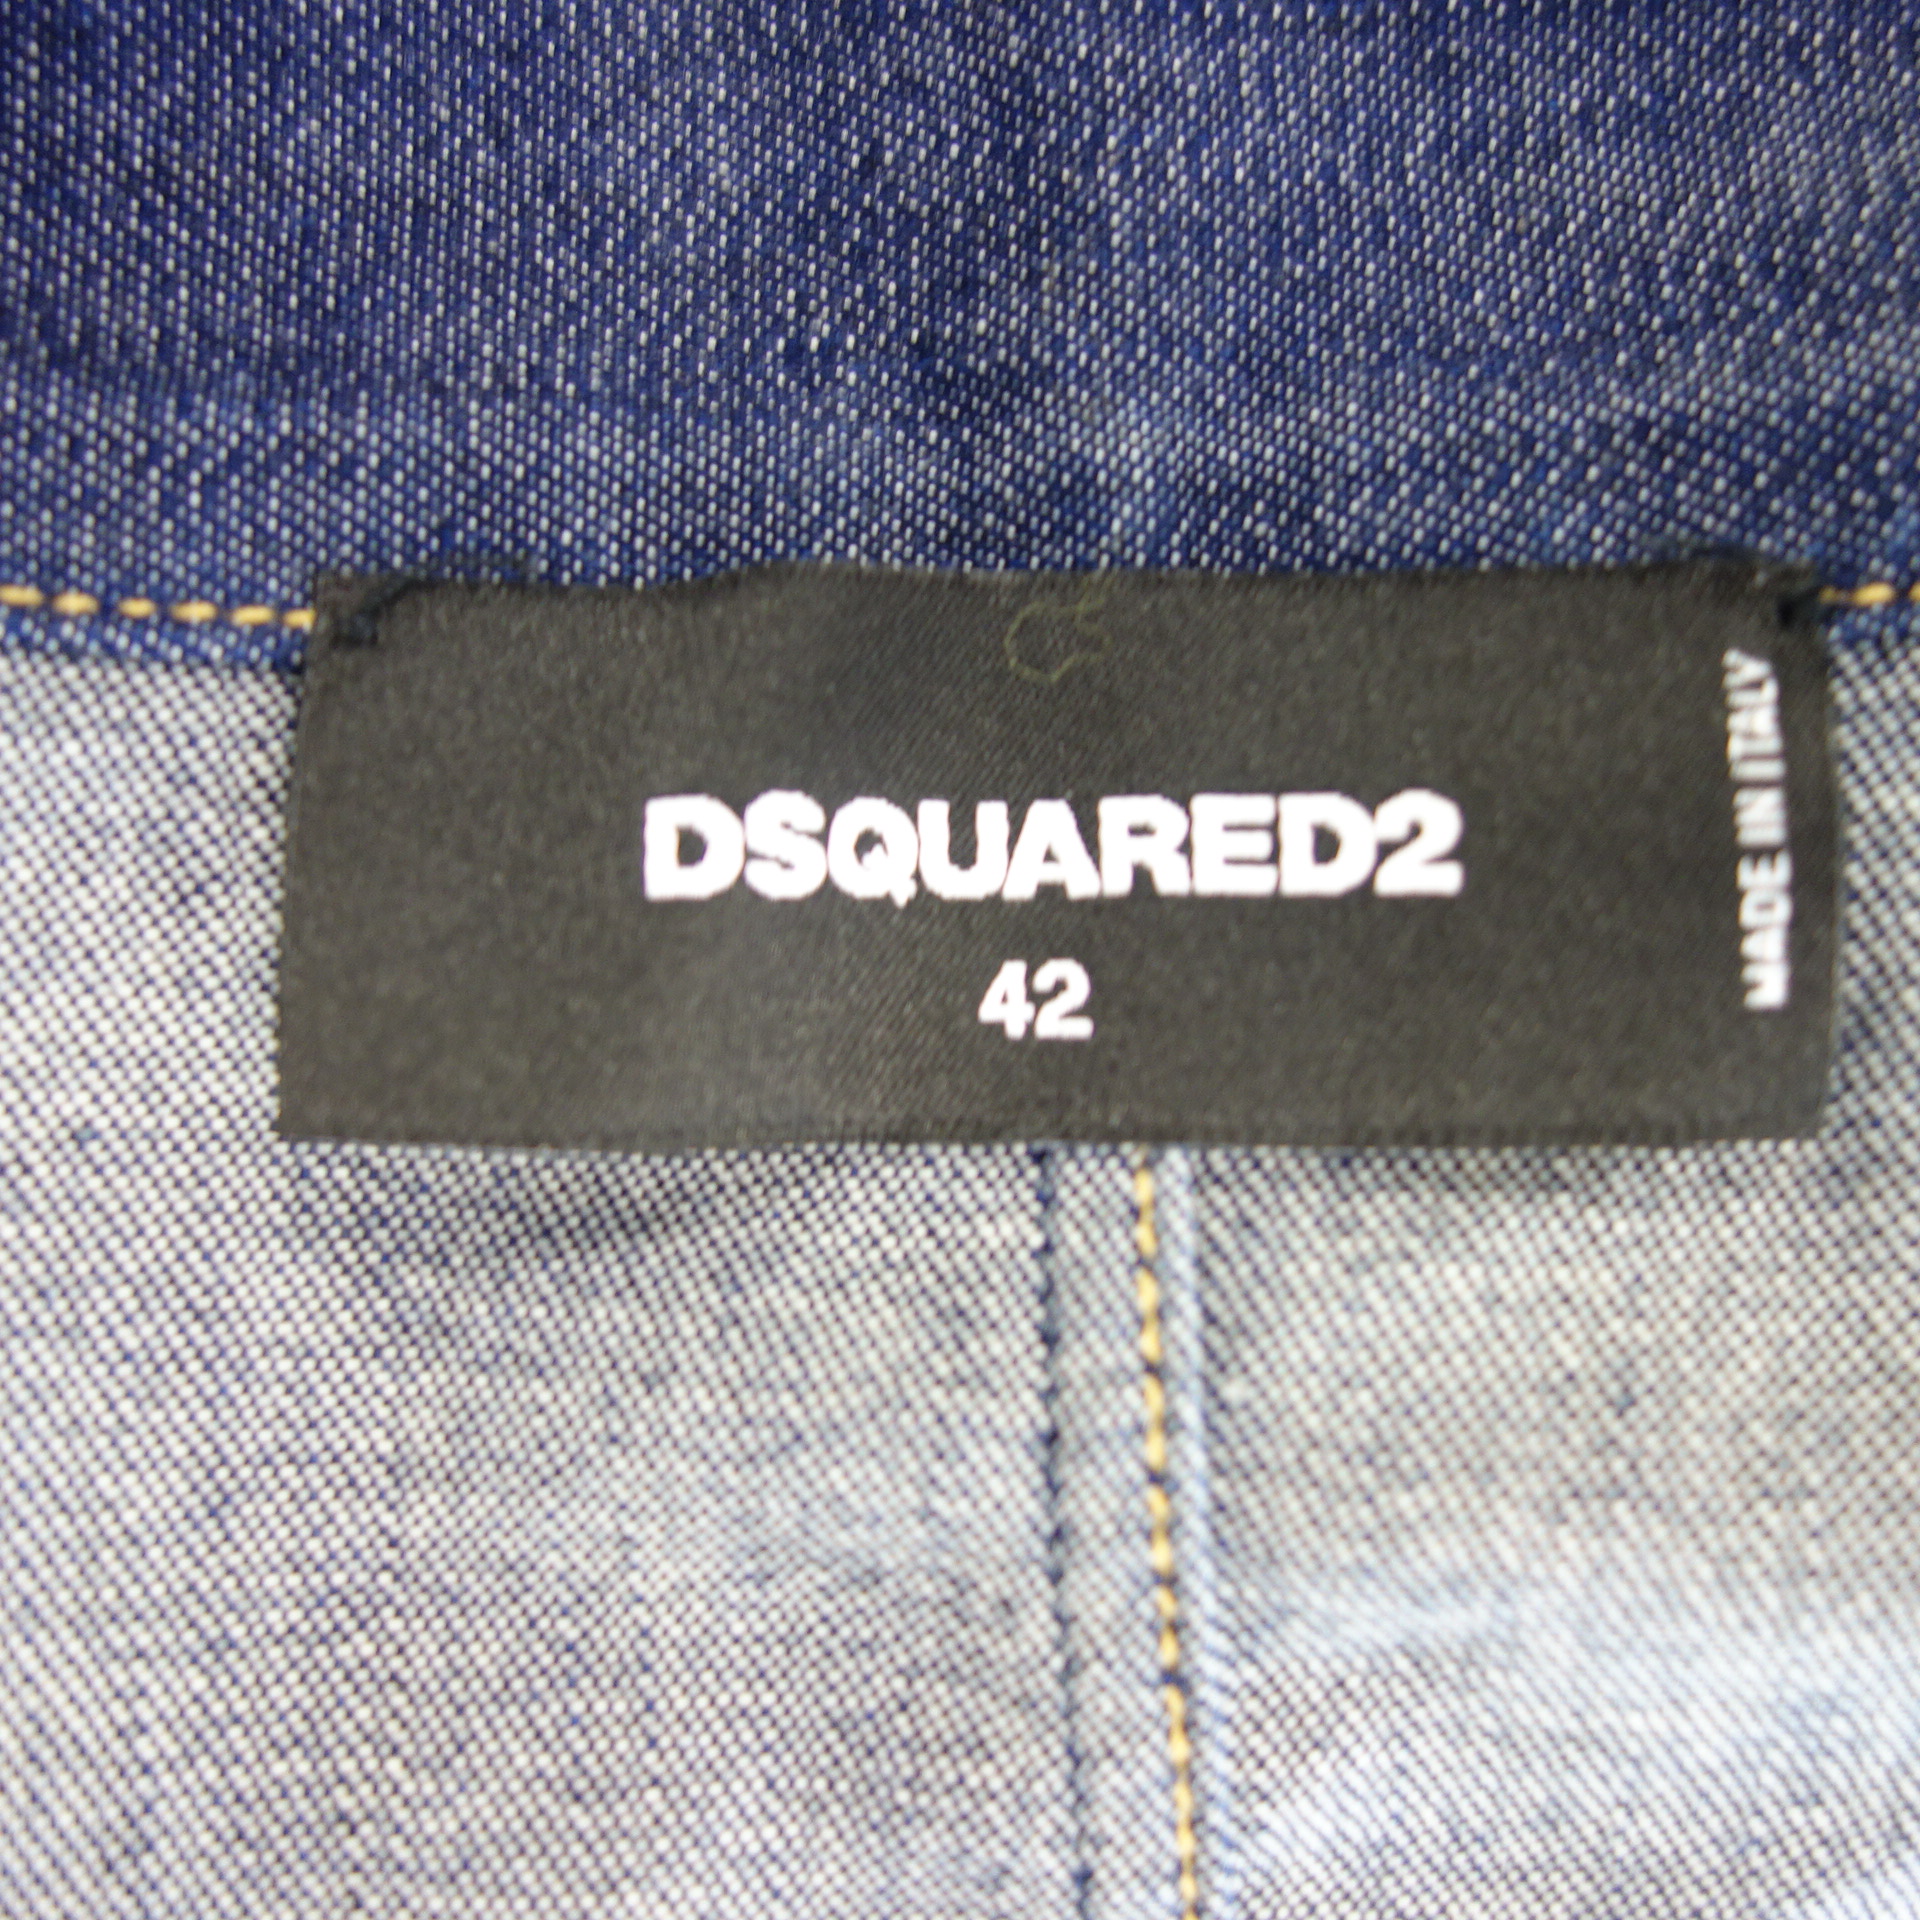 DSQUARED2 Dsquared 2 Damen Hemd Bluse Tunika Jacke Jeanshemd Jeansjacke Jeans Gürtel Blau